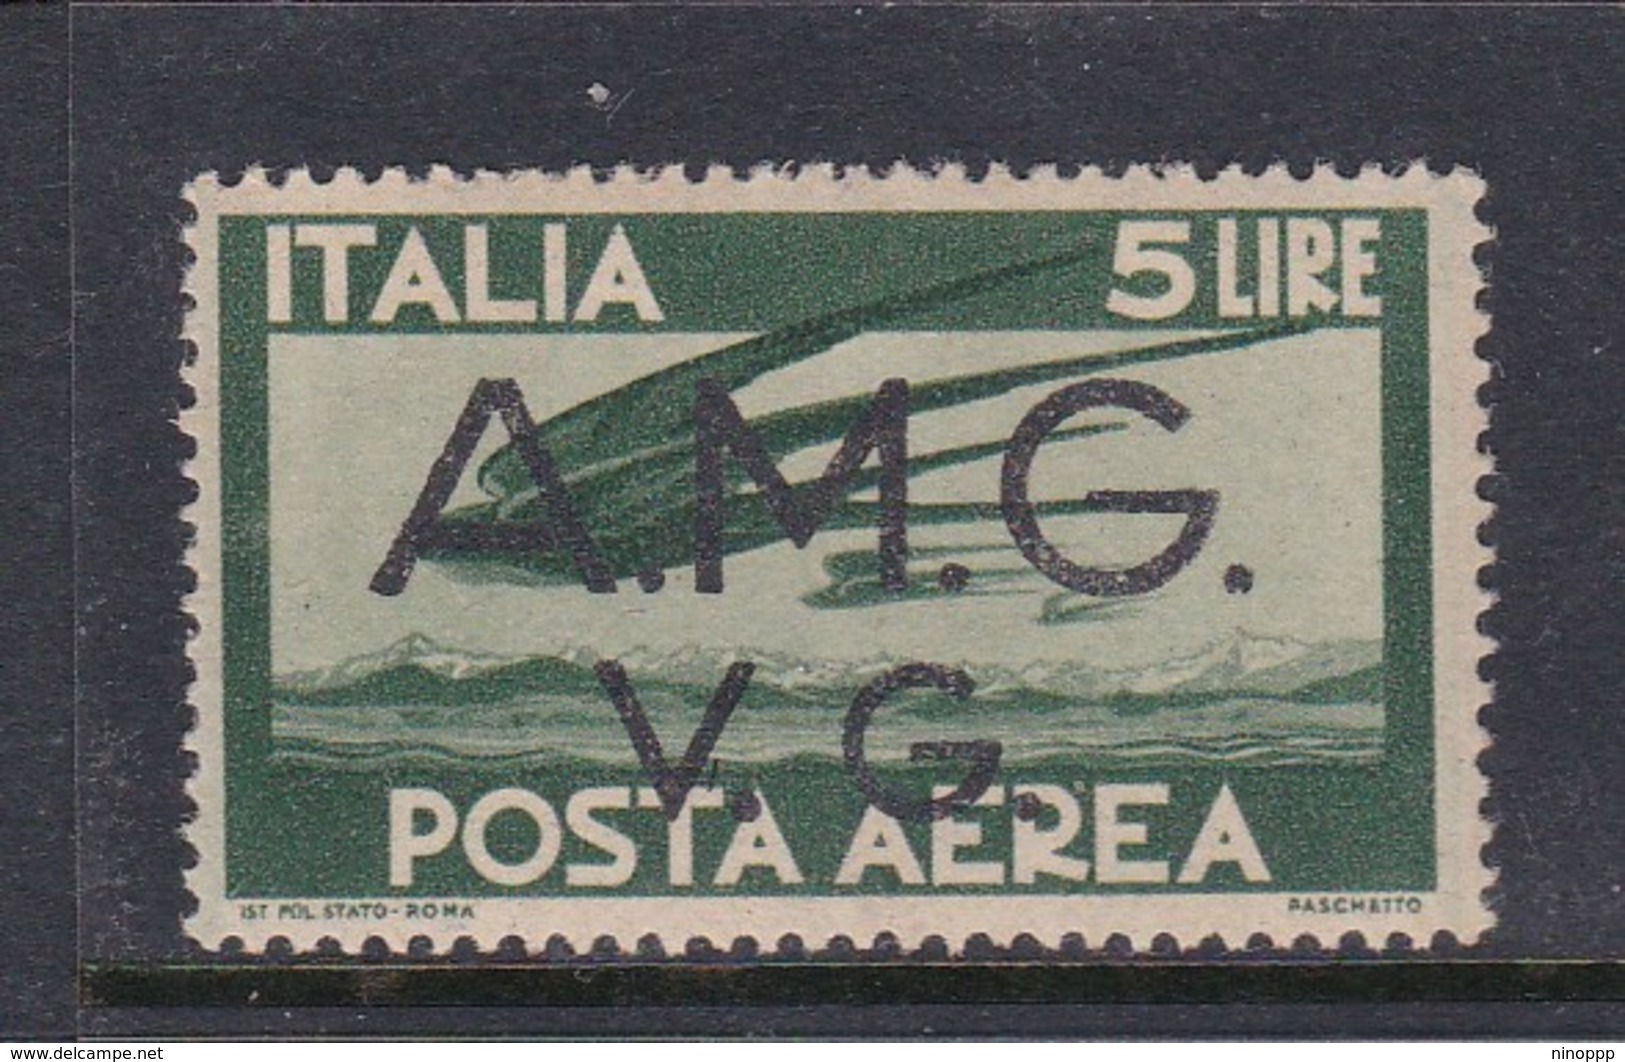 Venezia Giulia And Istria  A.M.G.V.G. Air Mail A 4 1945 Air Post 5 Lira Green Mint Never Hinged - Ongebruikt